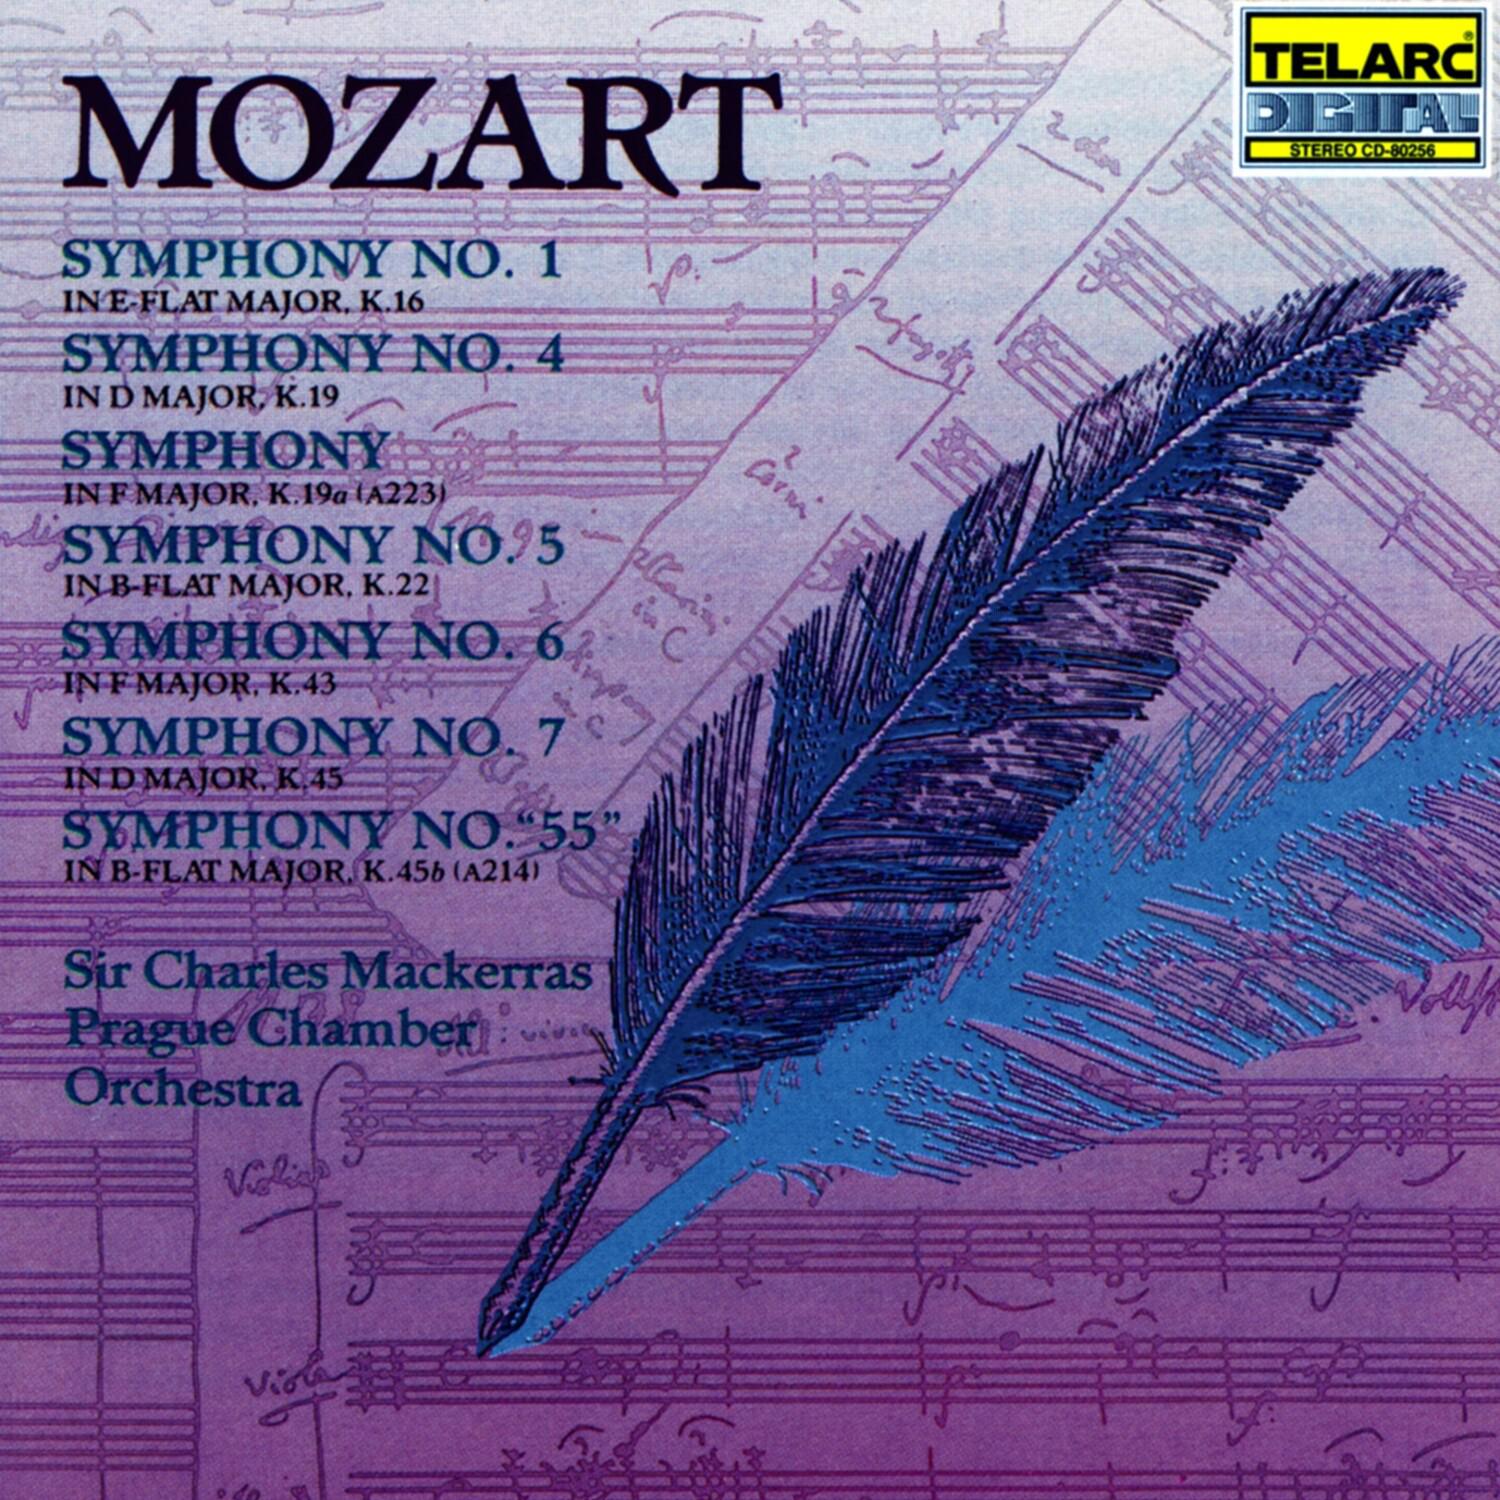 Symphony No. 6 in F major, K.43: I. Allegro